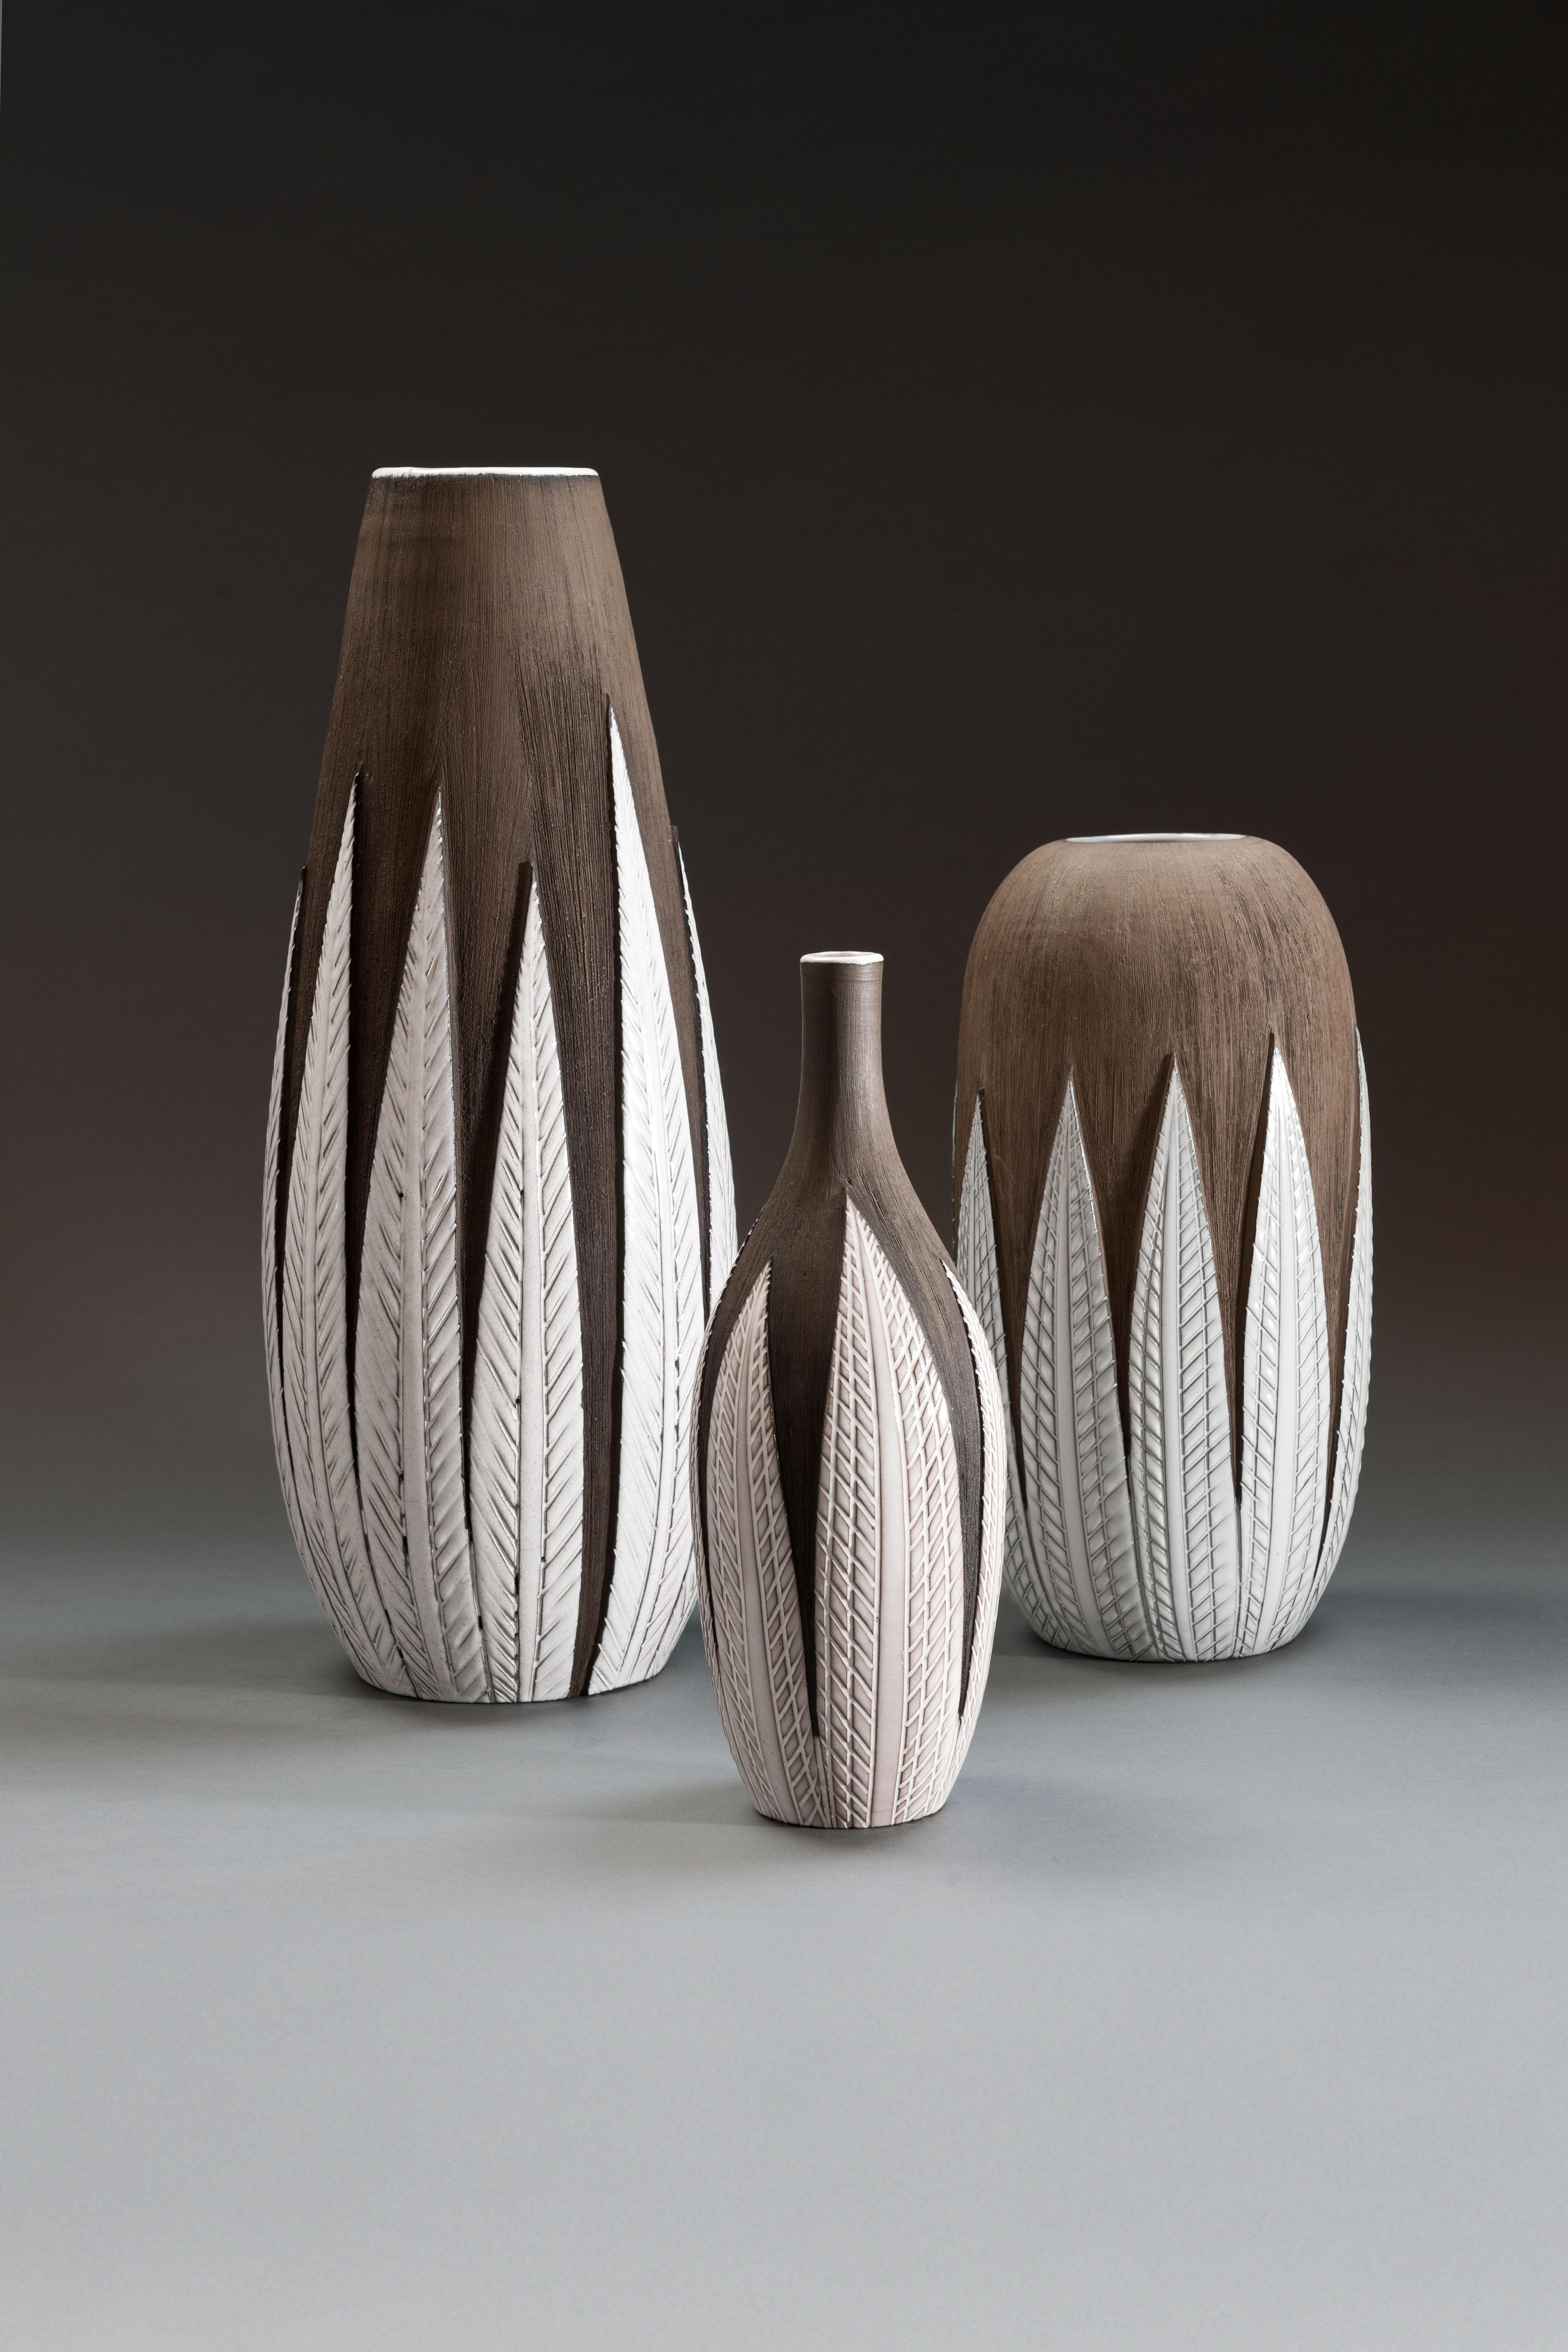 Scandinavian Modern Anna-Lisa Thomson Ceramic 'Paprika' Vases (3) by Upsala Ekeby For Sale